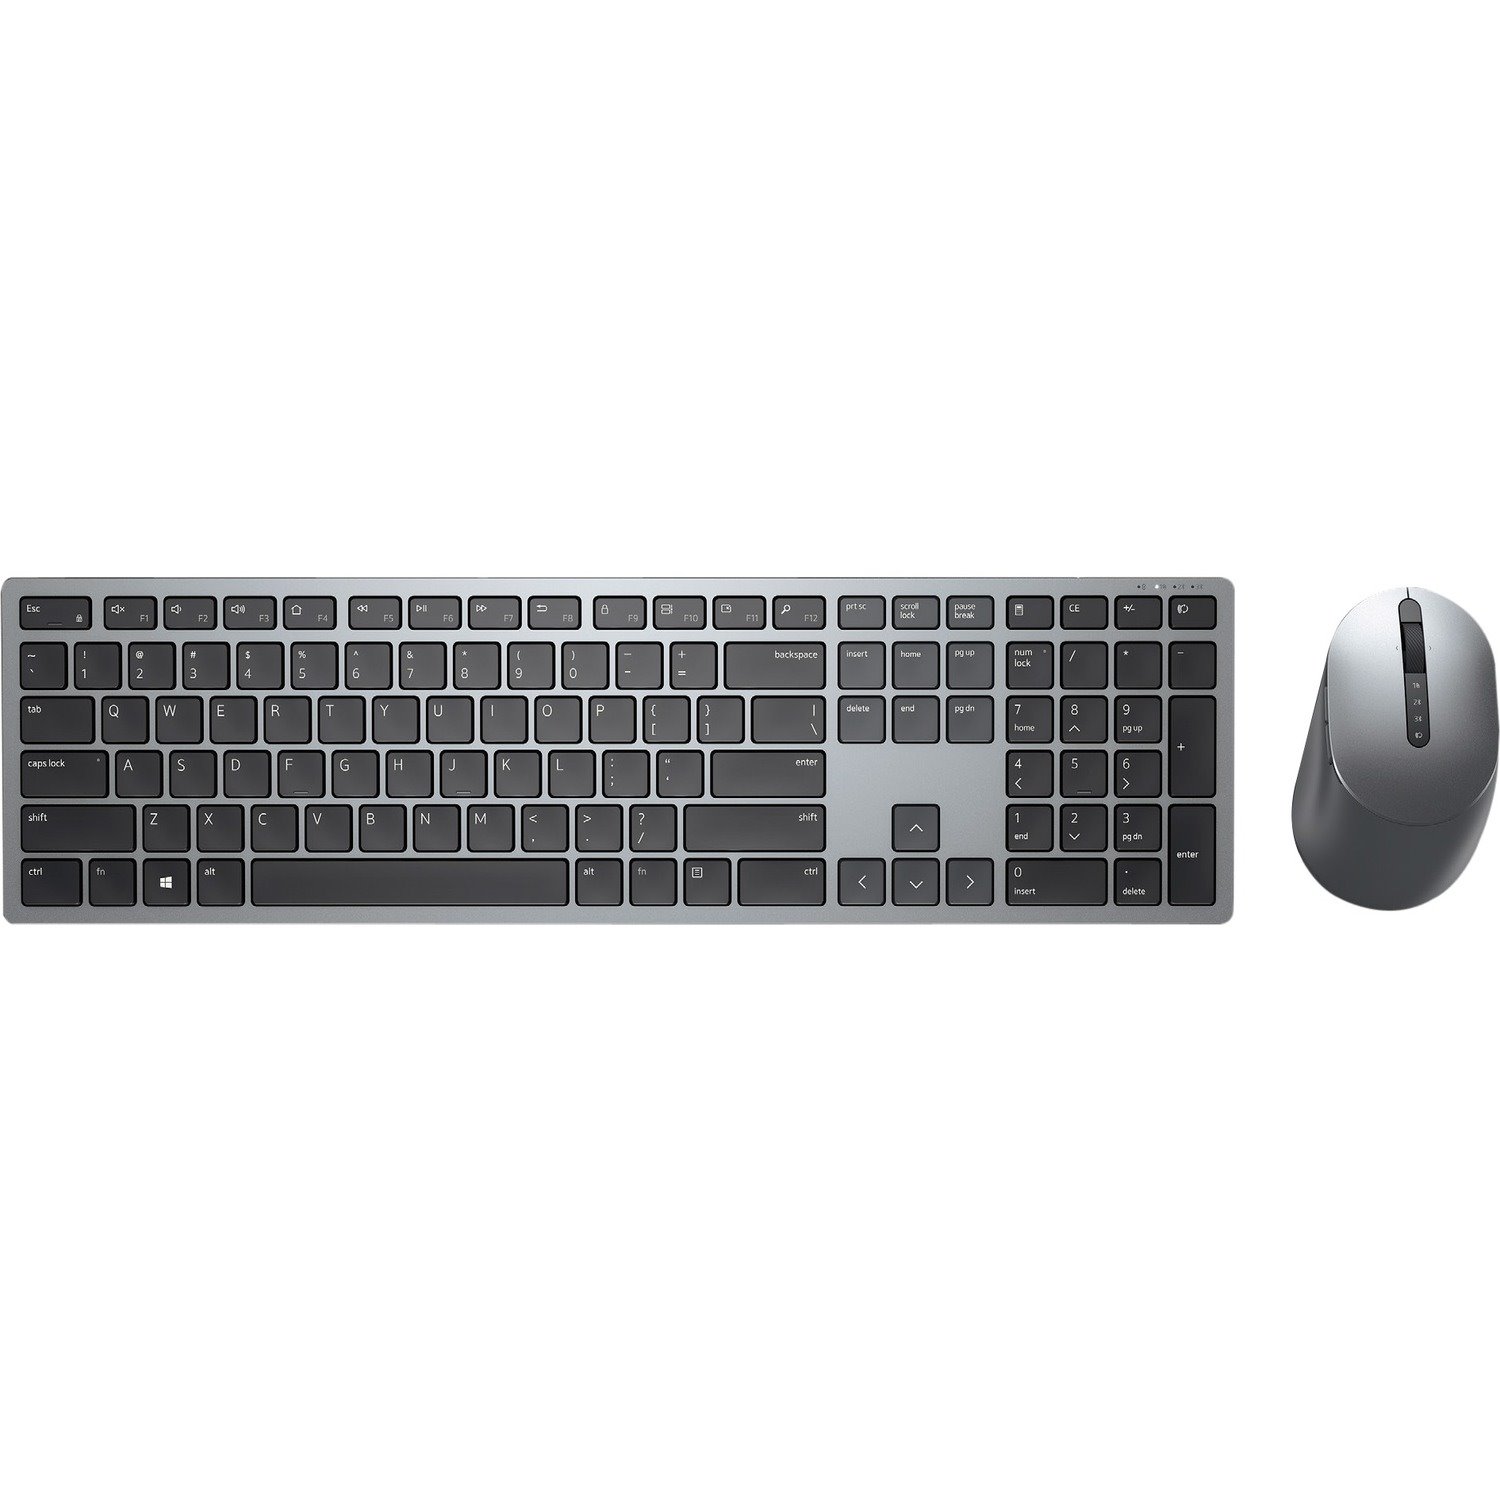 Dell Premier KM7321W Keyboard & Mouse - QWERTY - English (UK)